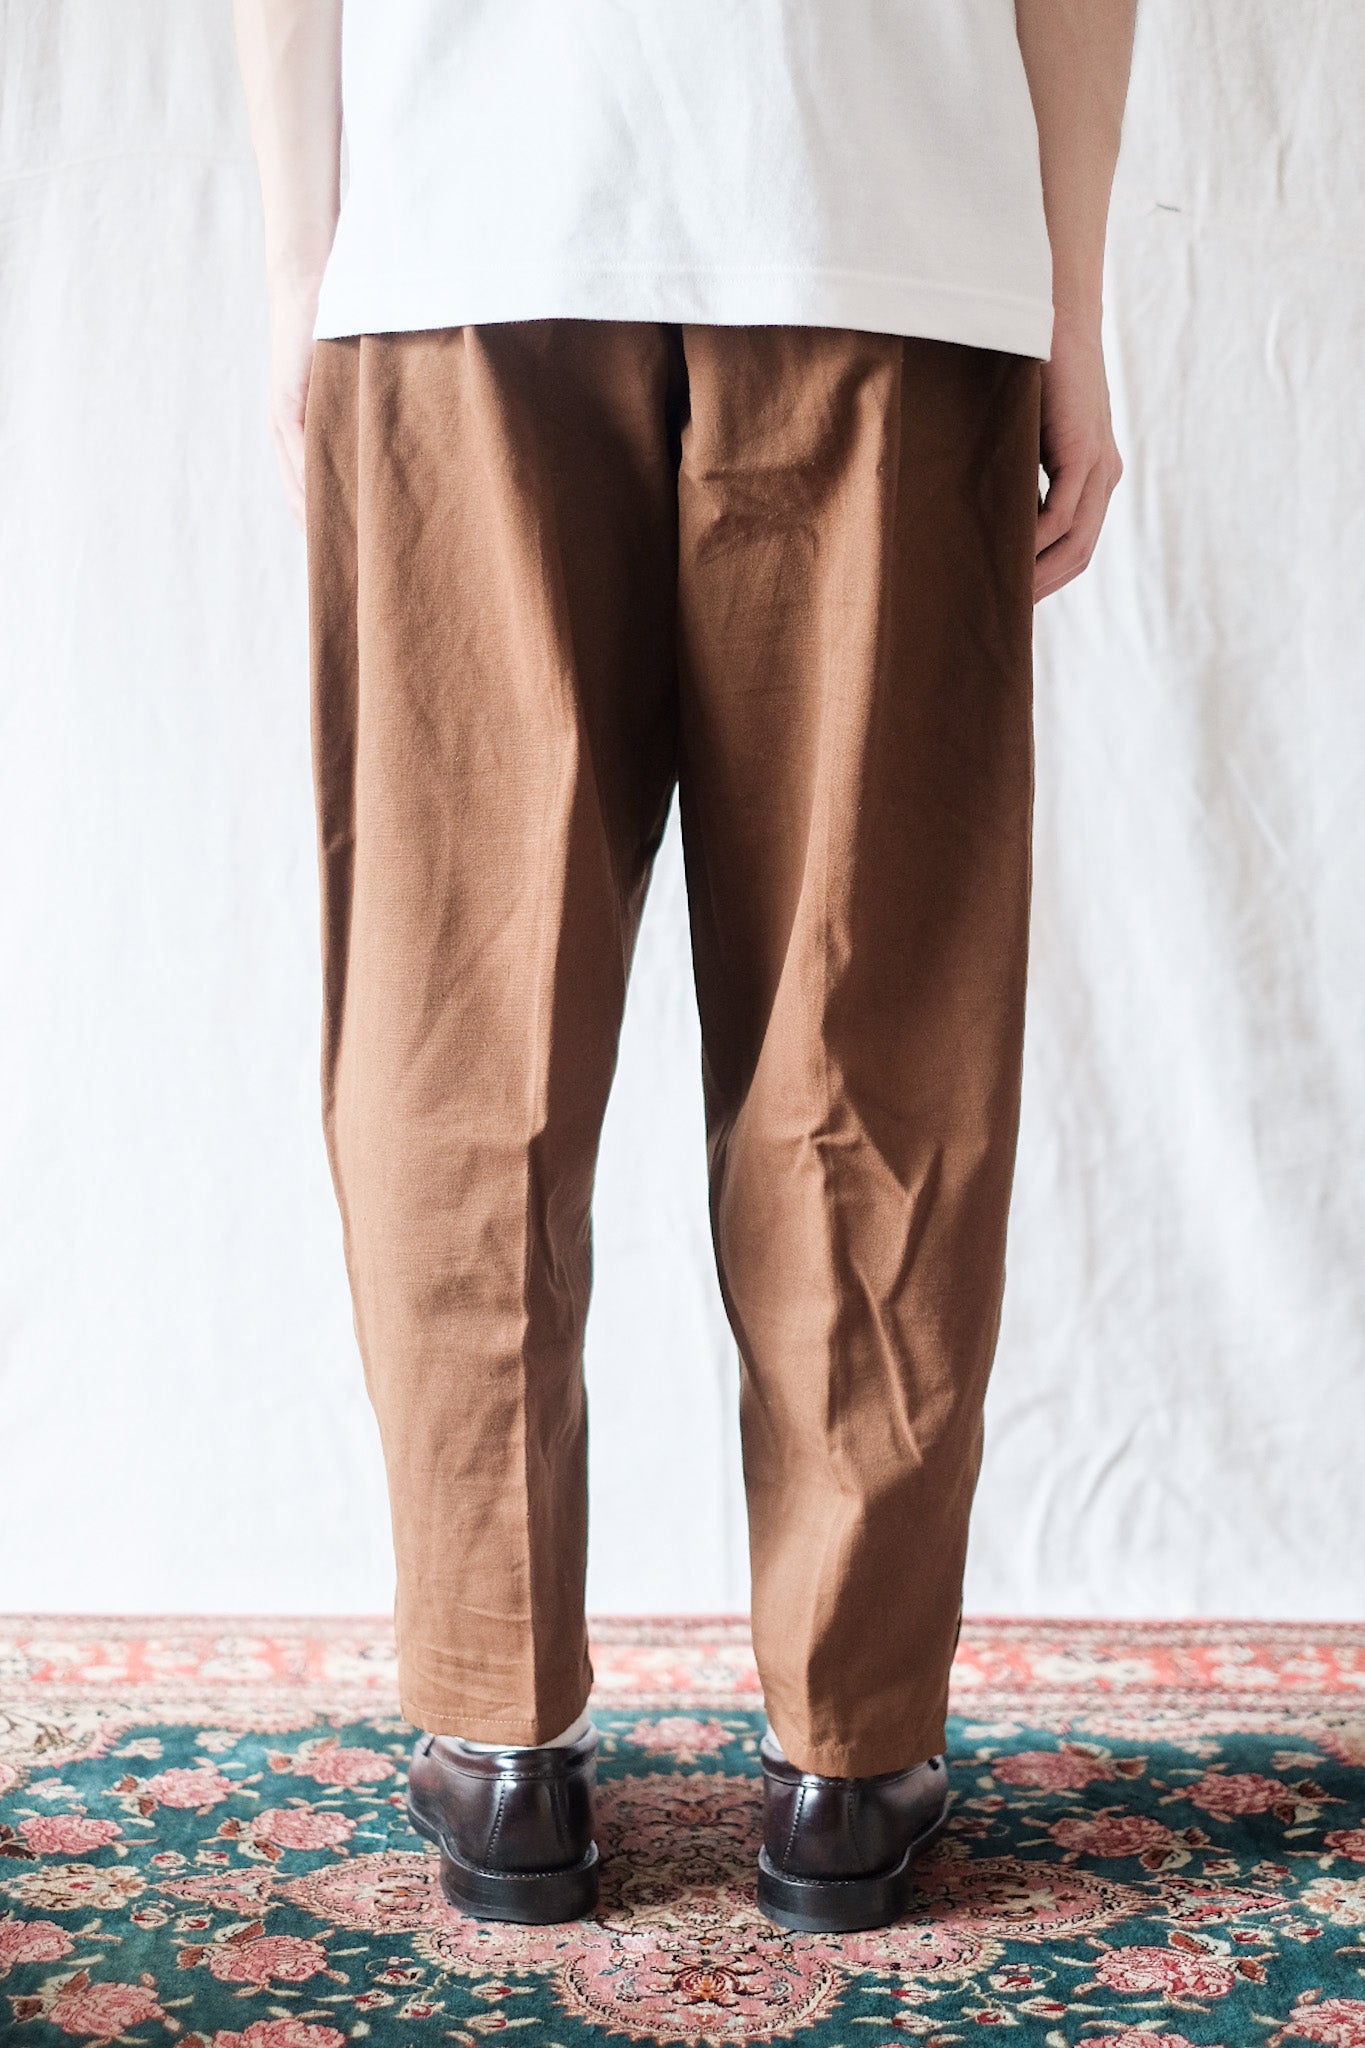 [~ 60's] French Vintage Brown Cotton Jodhpurs